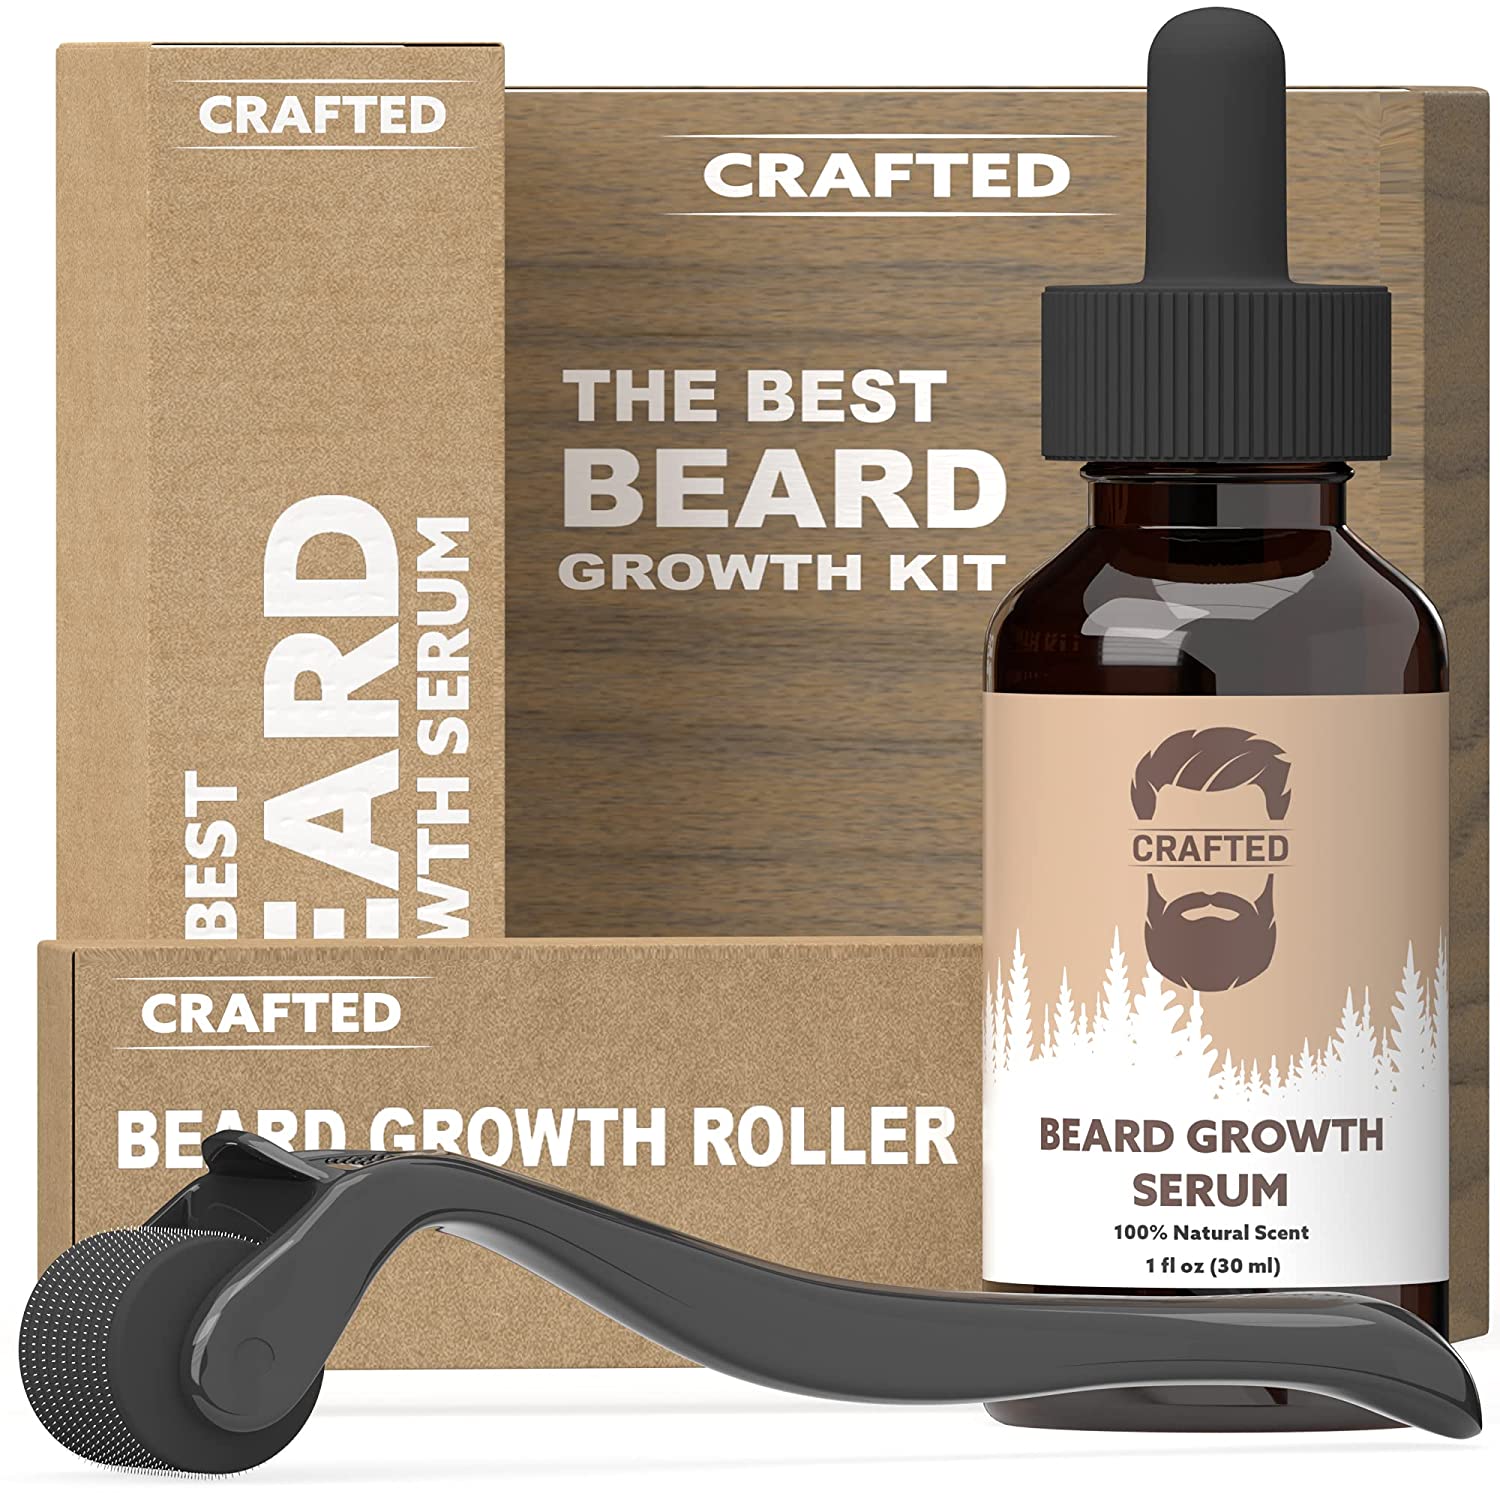 Derma Roller for Beard Growth + Beard Growth Serum - Stimulate Beard and Hair Growth - Derma Roller for Men - Amazing Beard Growth Kit - image 1 of 6